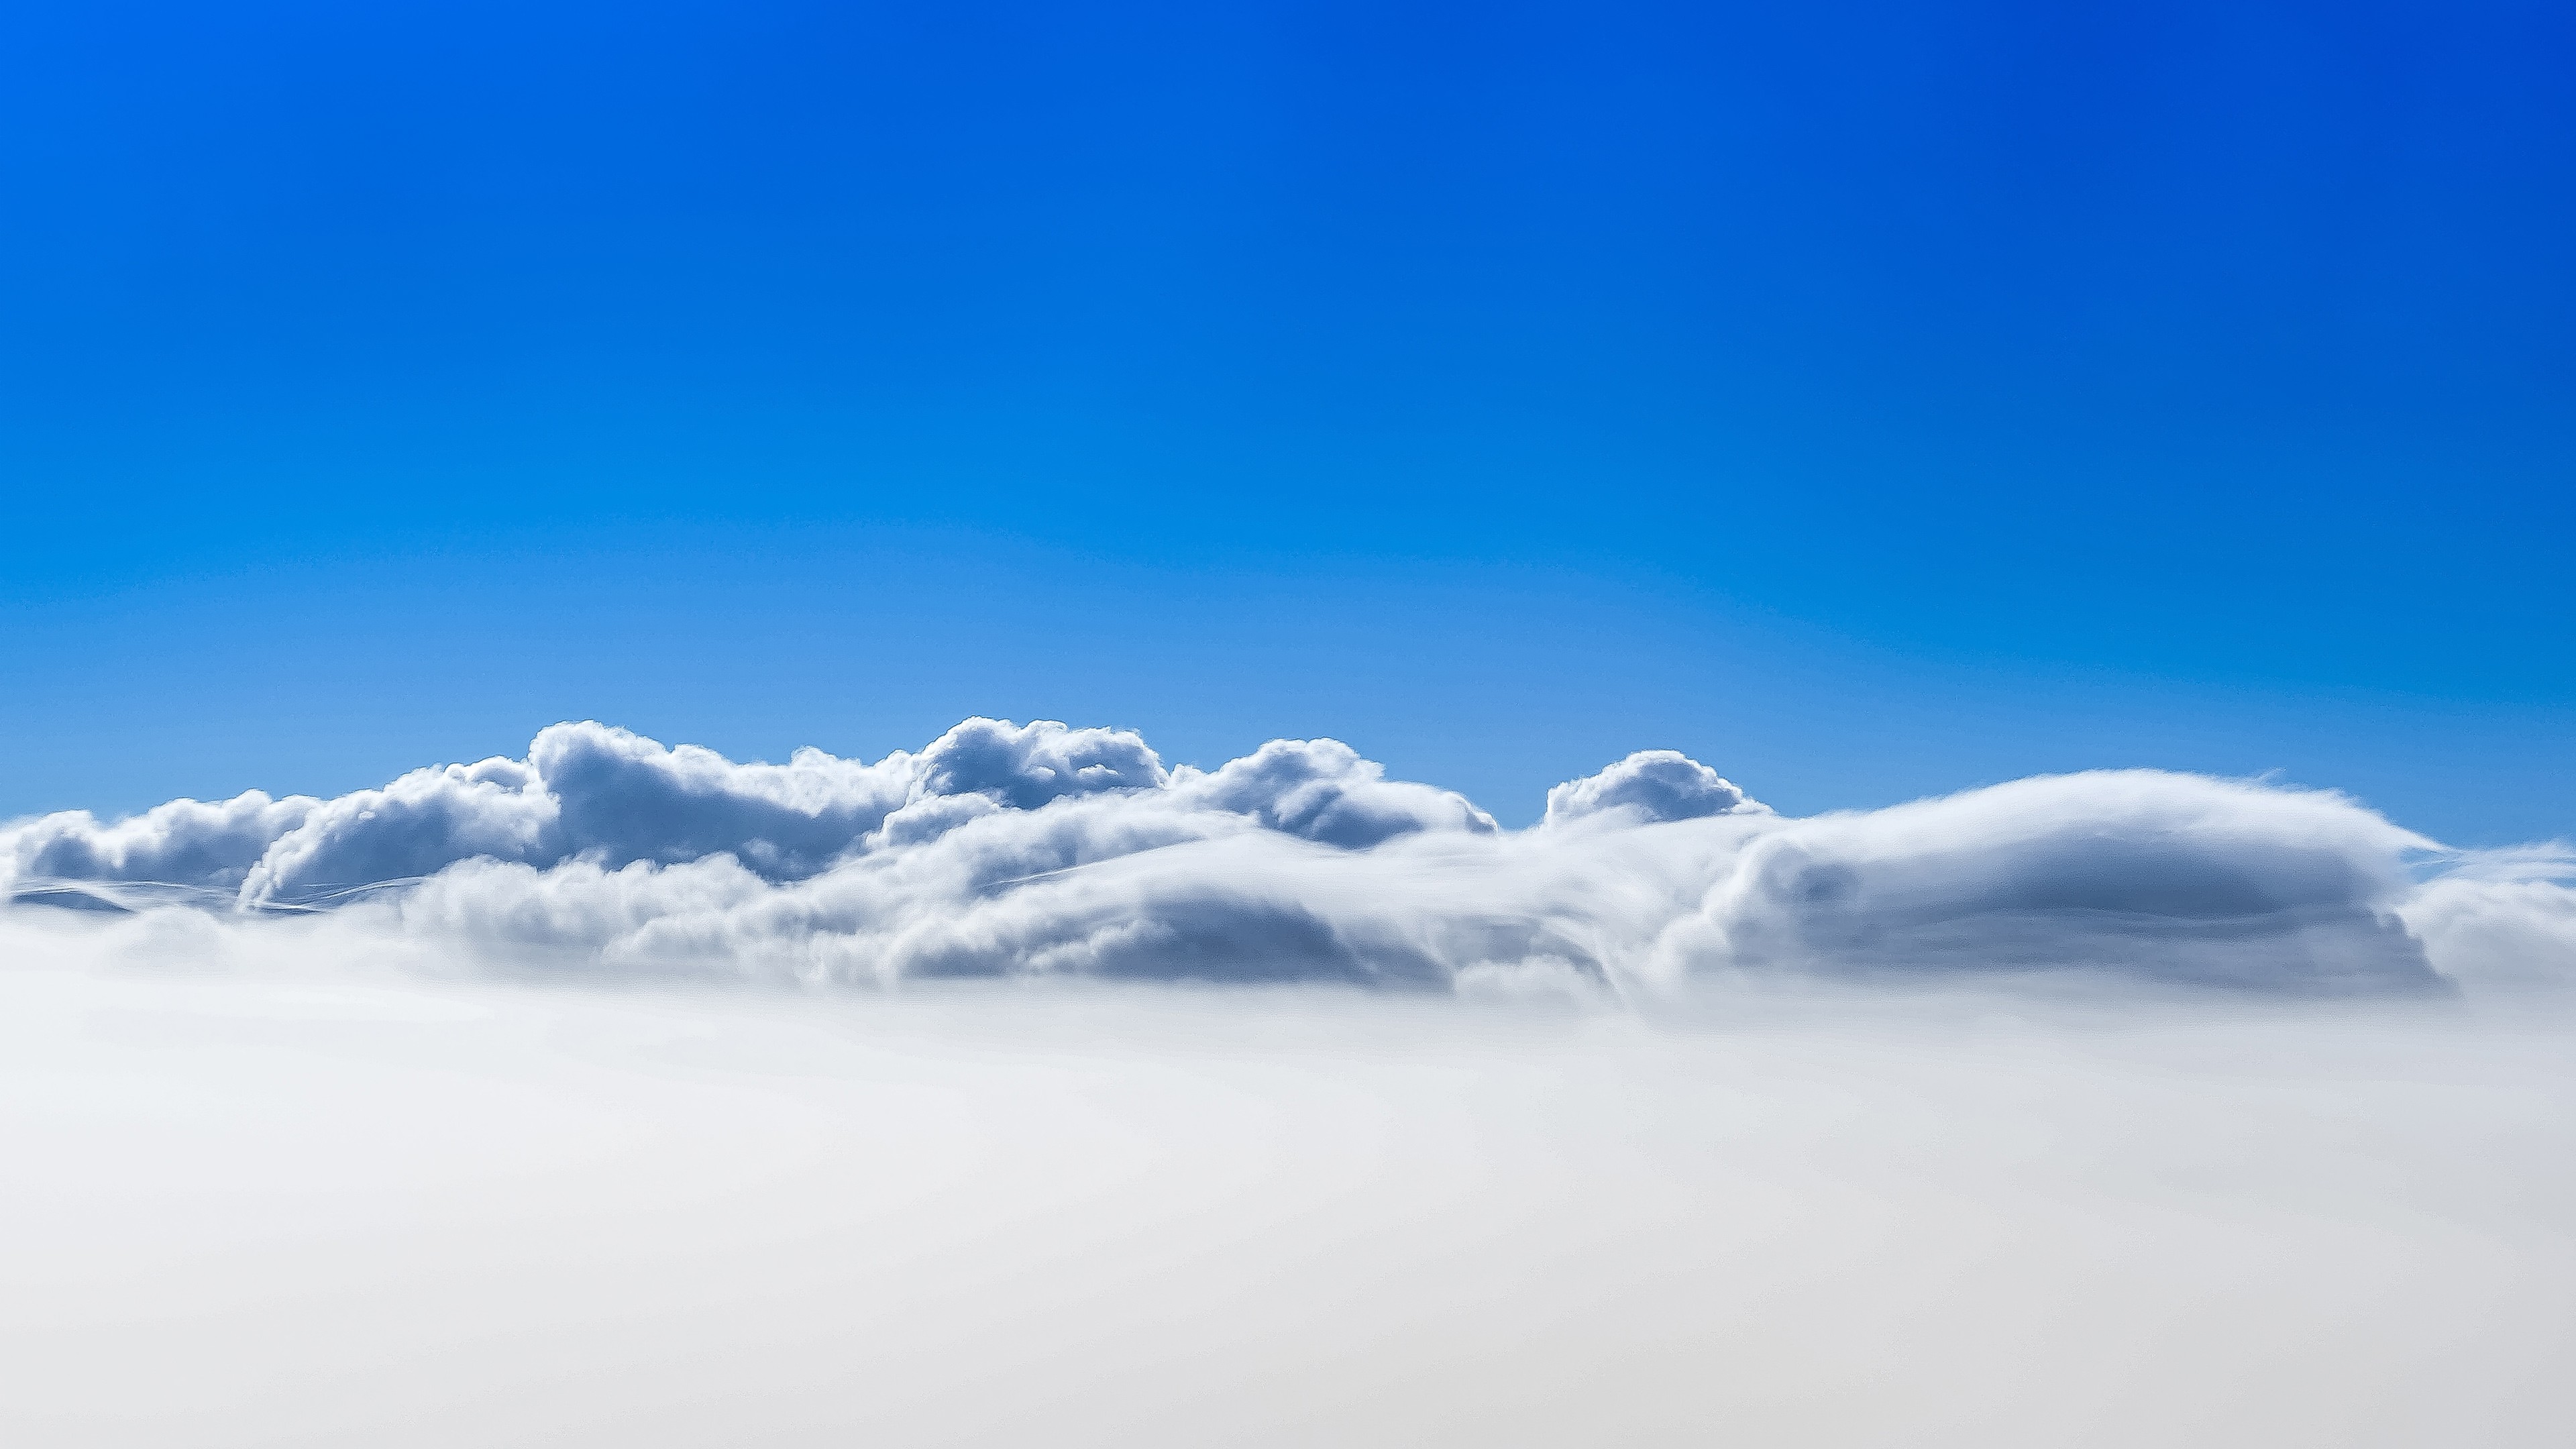 4k白の壁紙,空,雲,青い,昼間,雰囲気